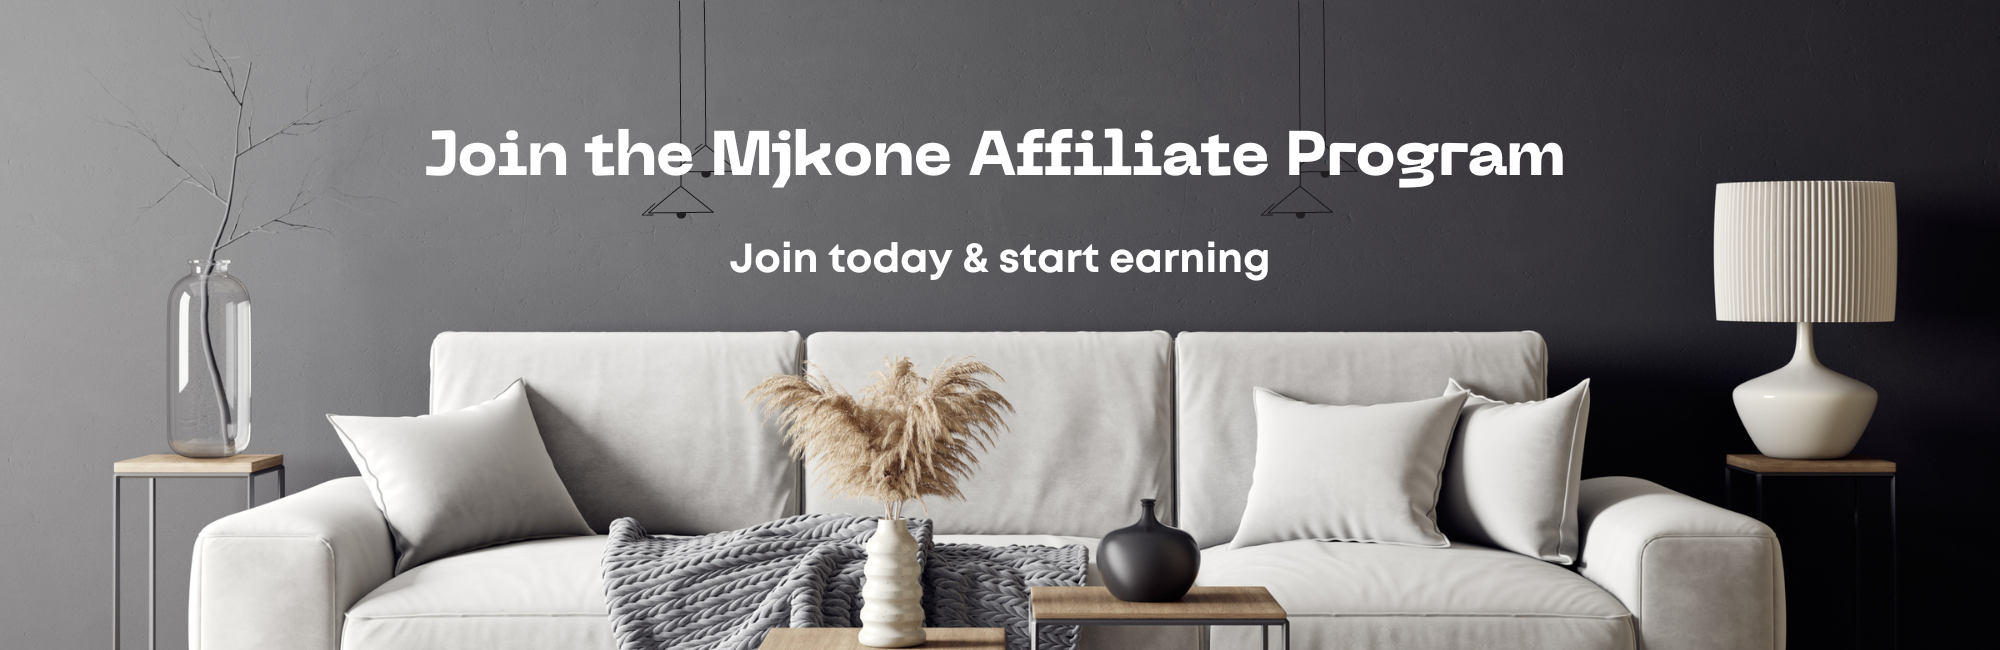 Join the Mjkone Affiliate Program